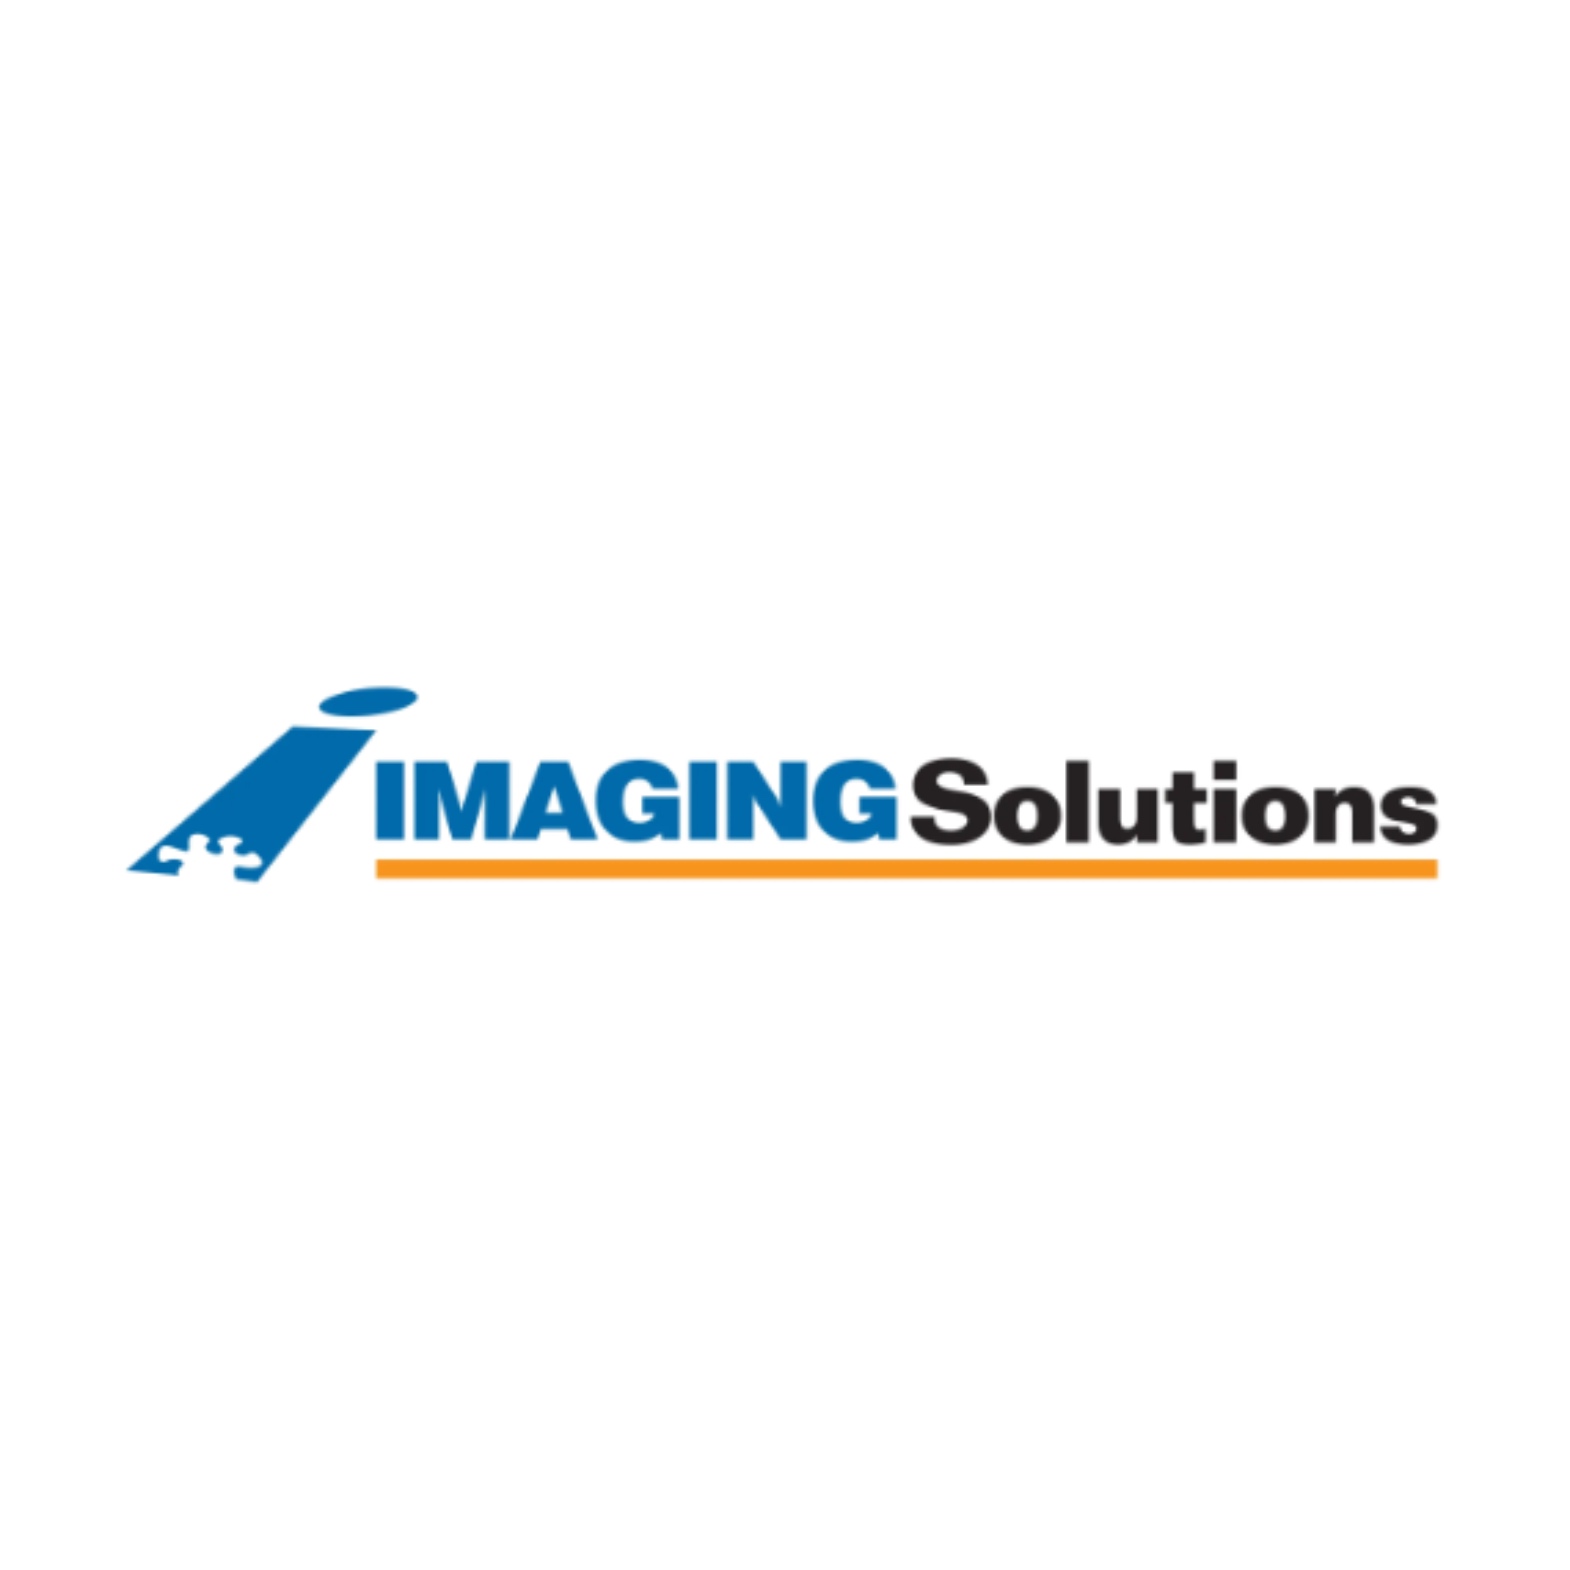 images/AFMS/Partners/ImagingSolutions.jpg#joomlaImage://local-images/AFMS/Partners/ImagingSolutions.jpg?width=1570&height=1570